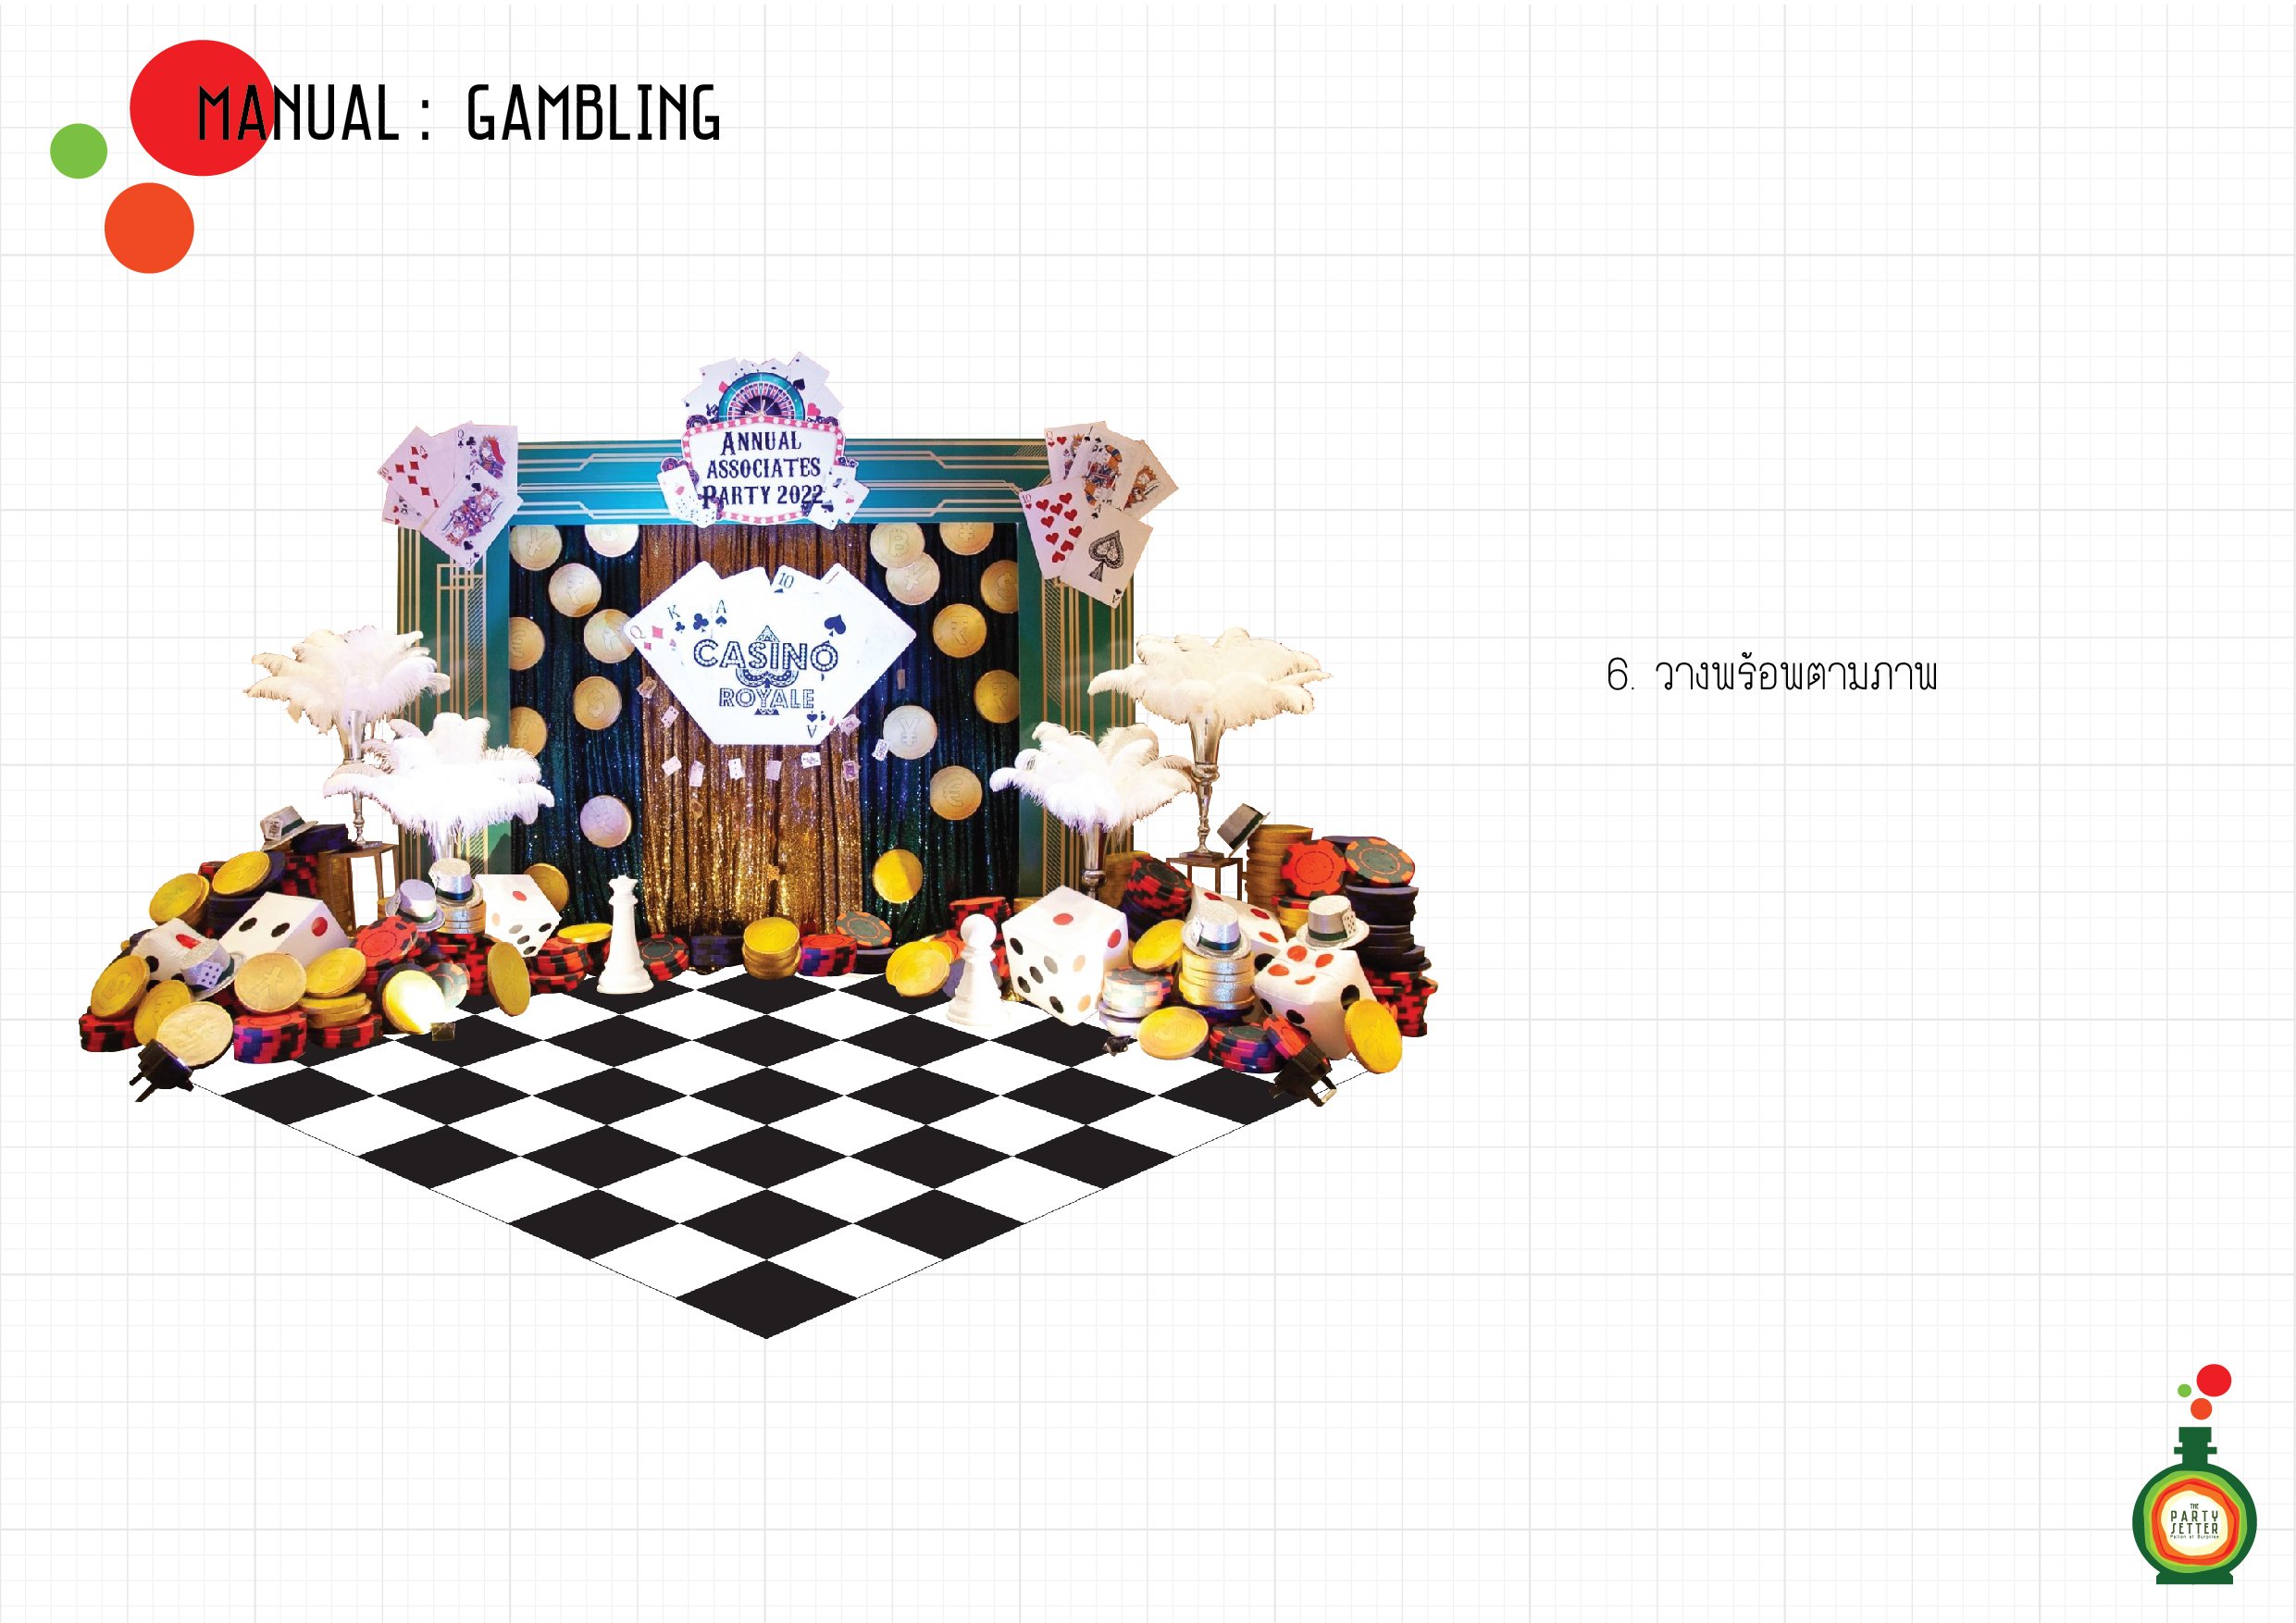 Manual_Gambling-06-01.jpg